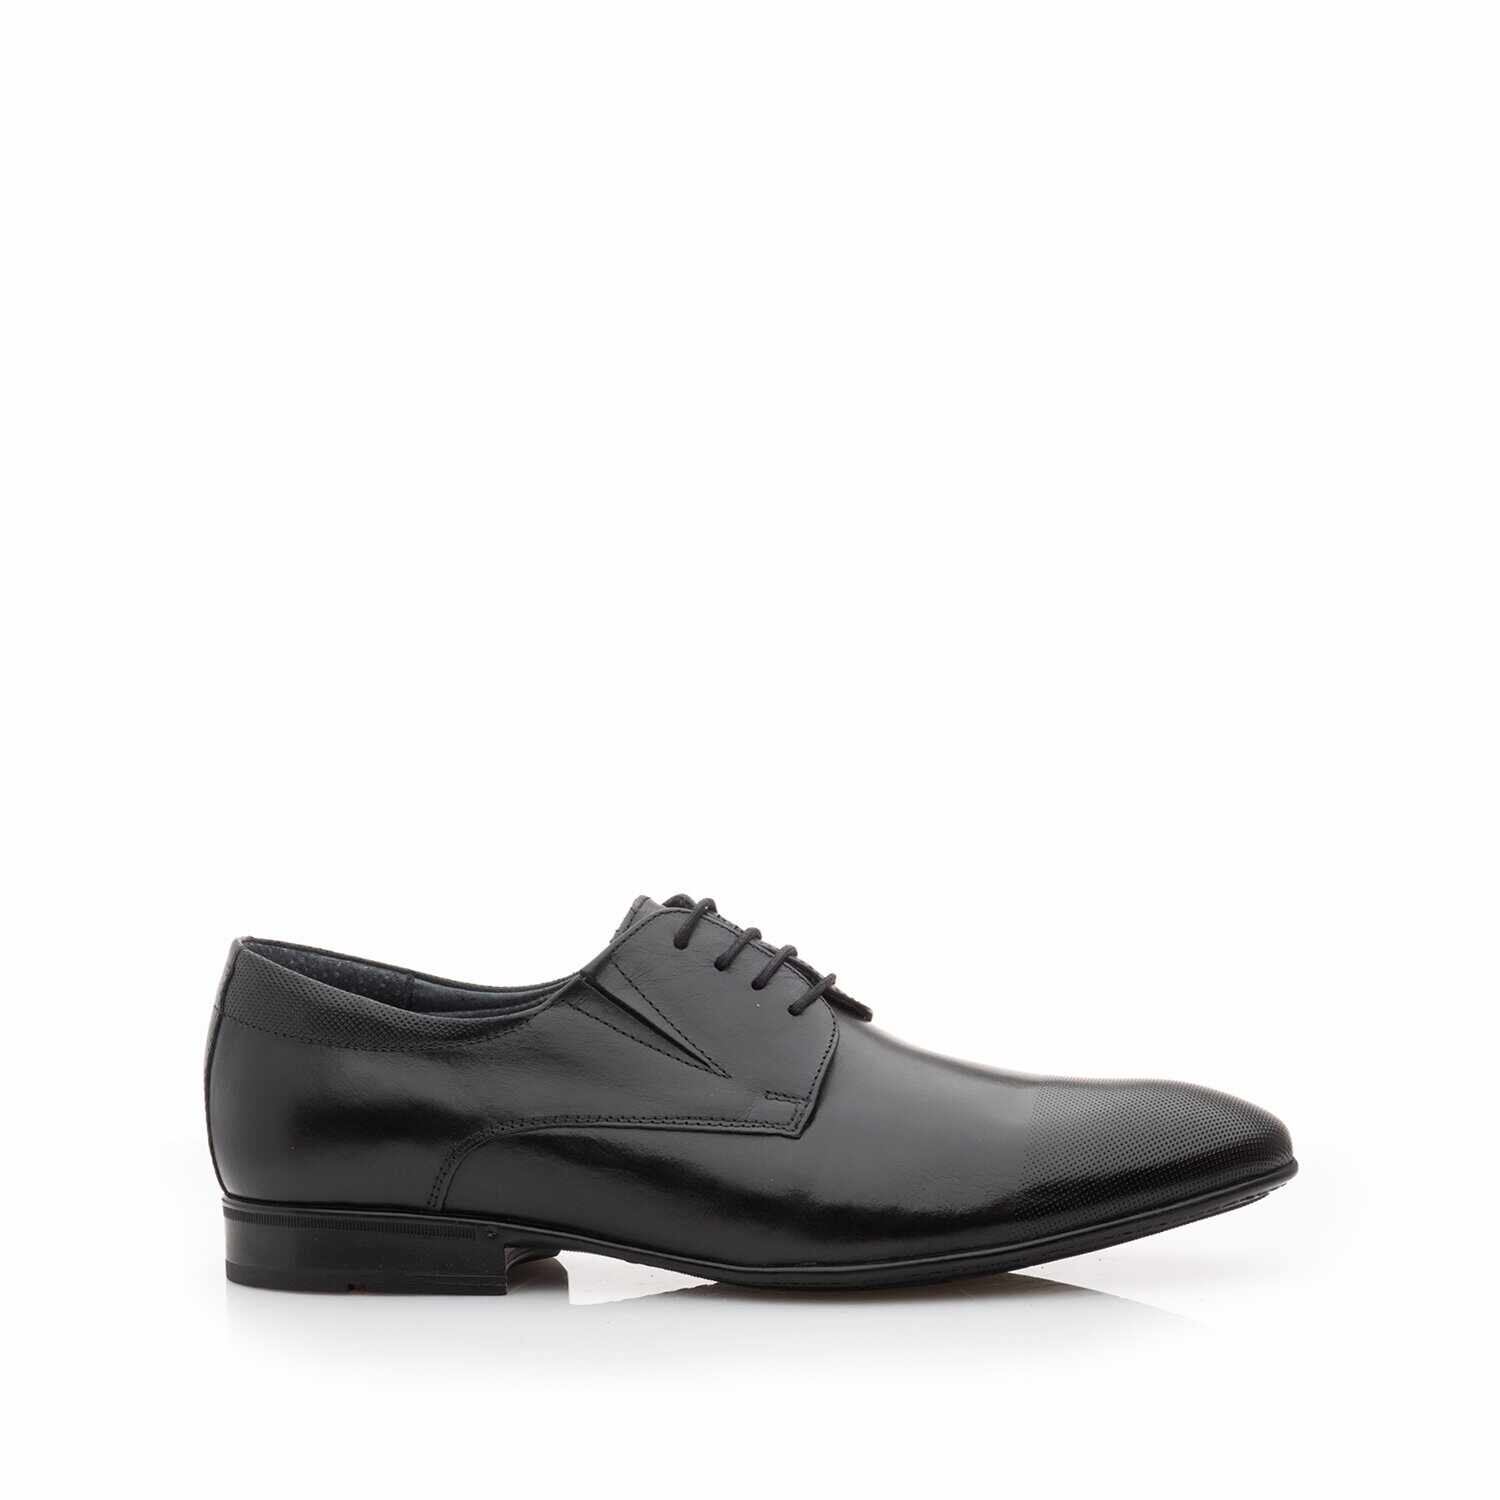 Pantofi eleganti barbati din piele naturala, Leofex- 792 negru box